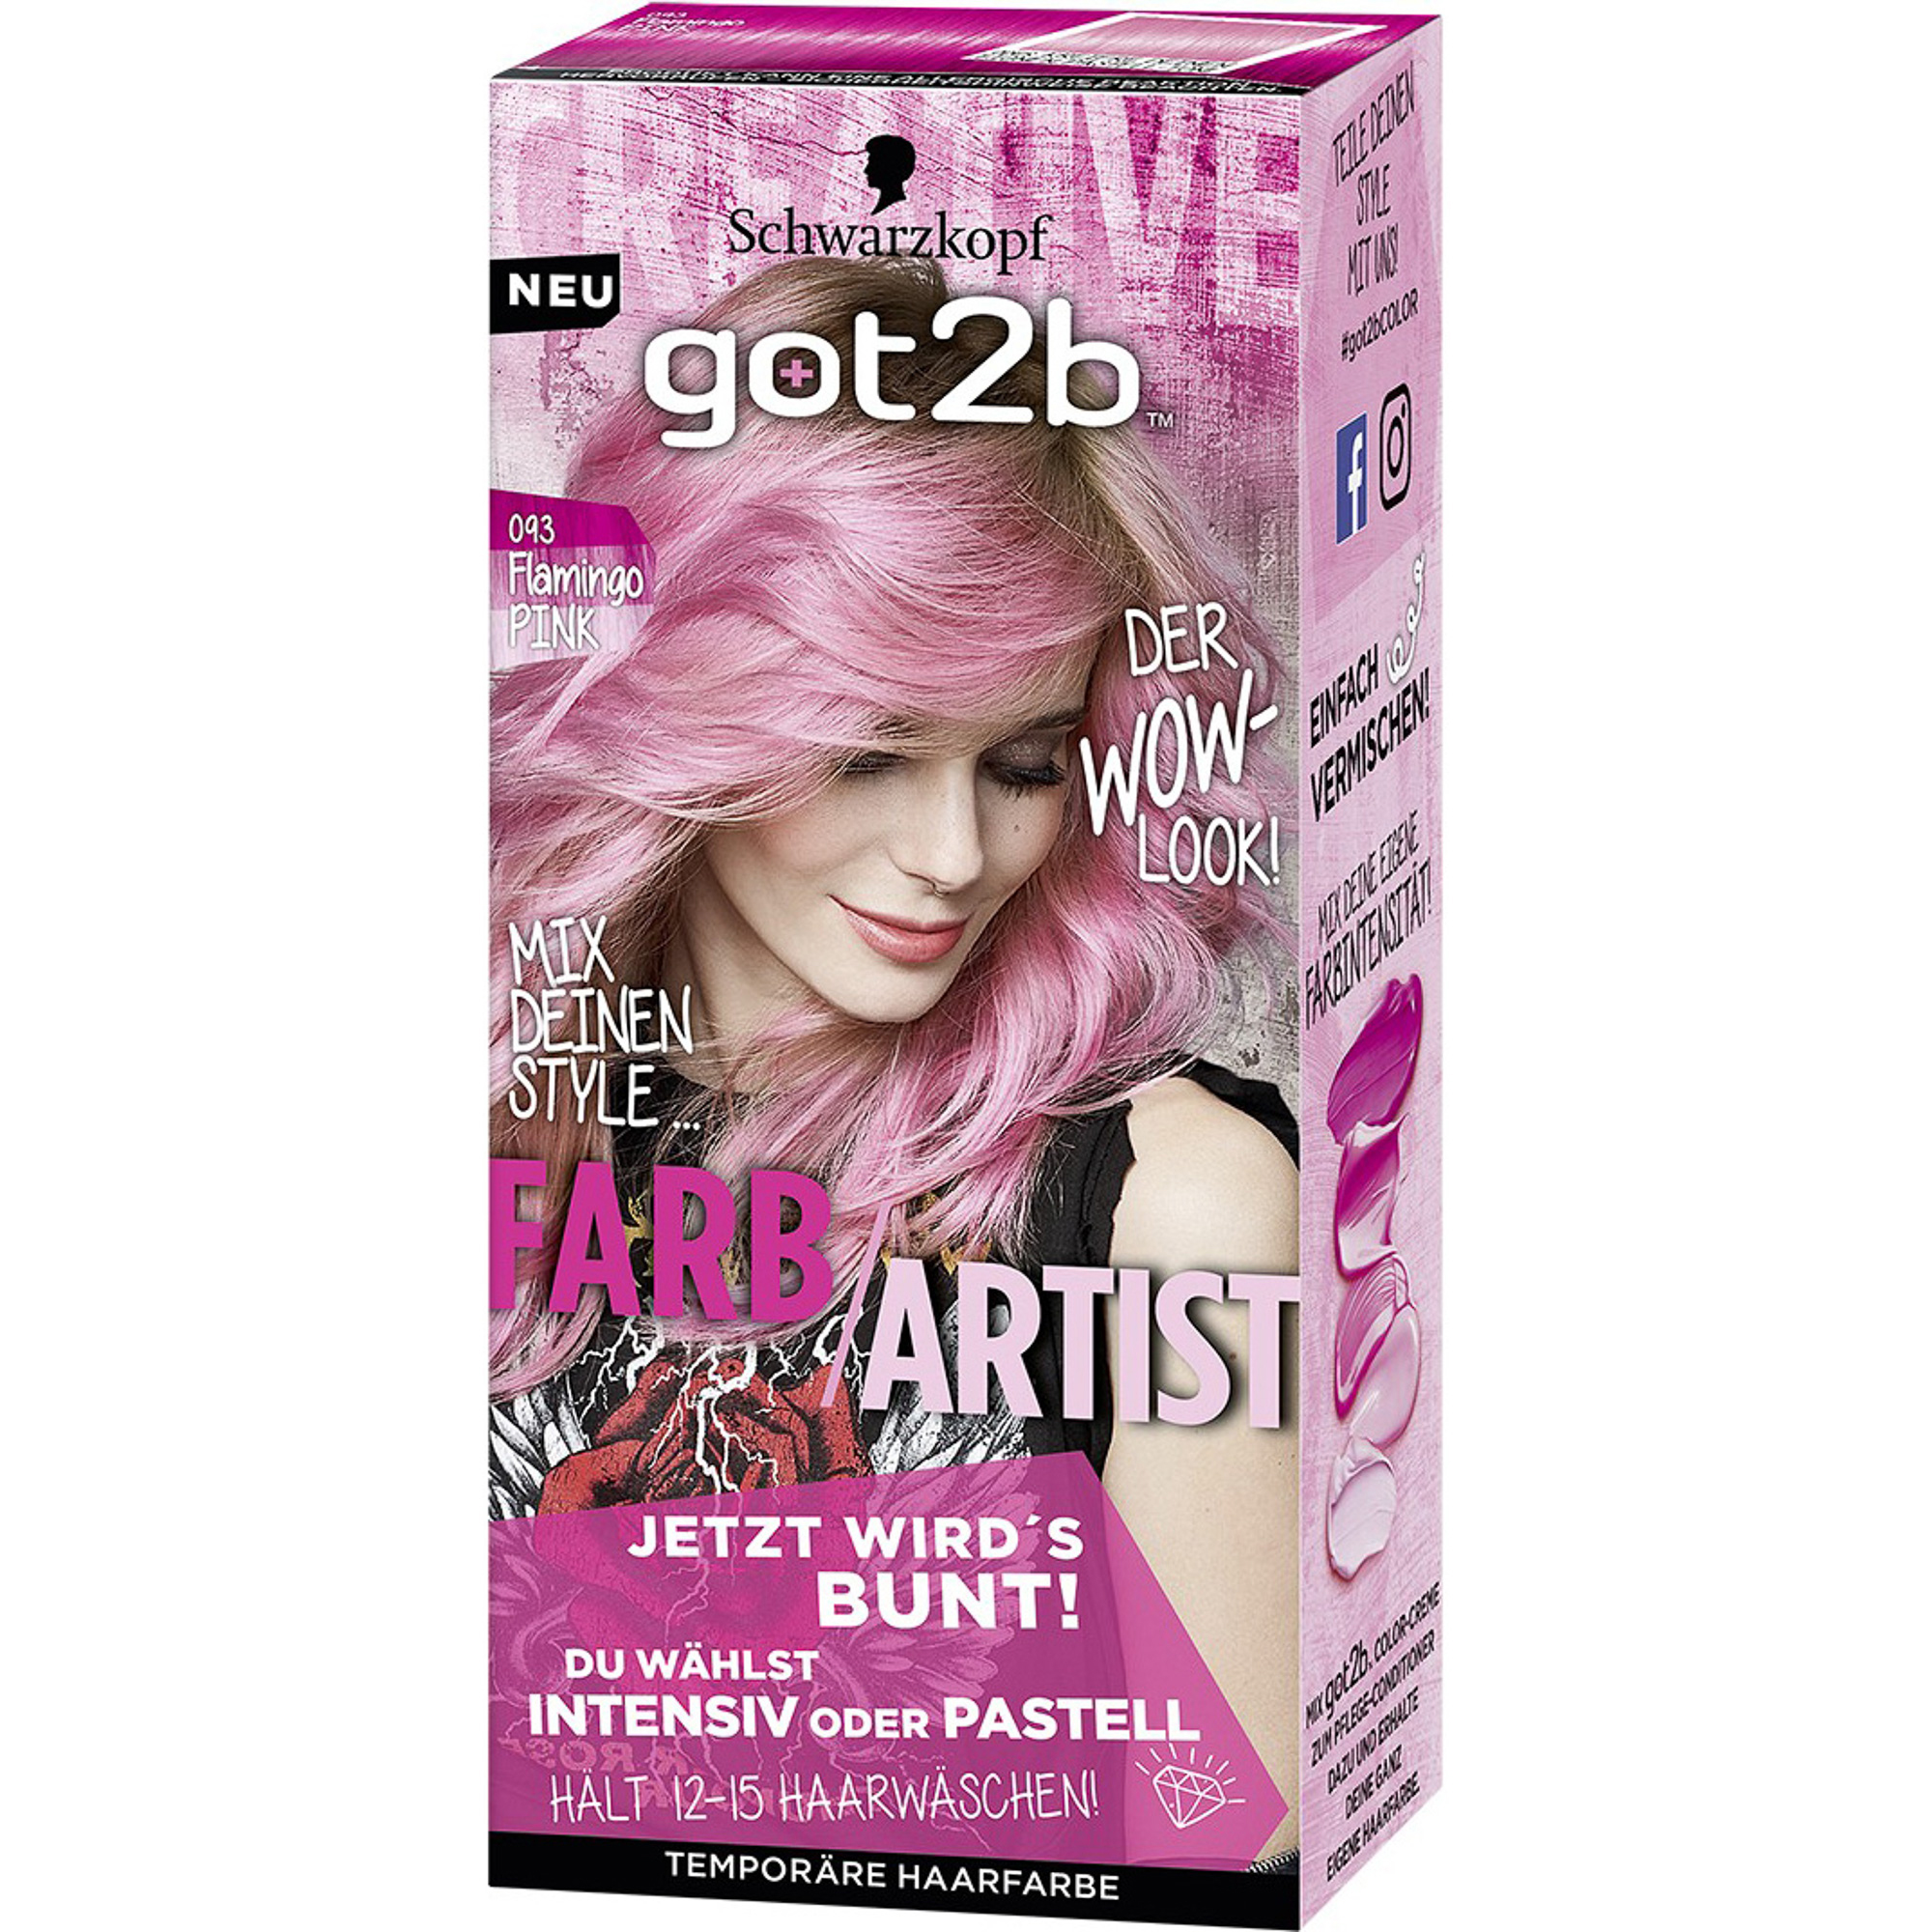 Тонирующая краска для волос Got2b Farb Artist 093 Flamingo Pink 80 мл тонирующая краска для волос got2b farb artist 093 flamingo pink 80 мл